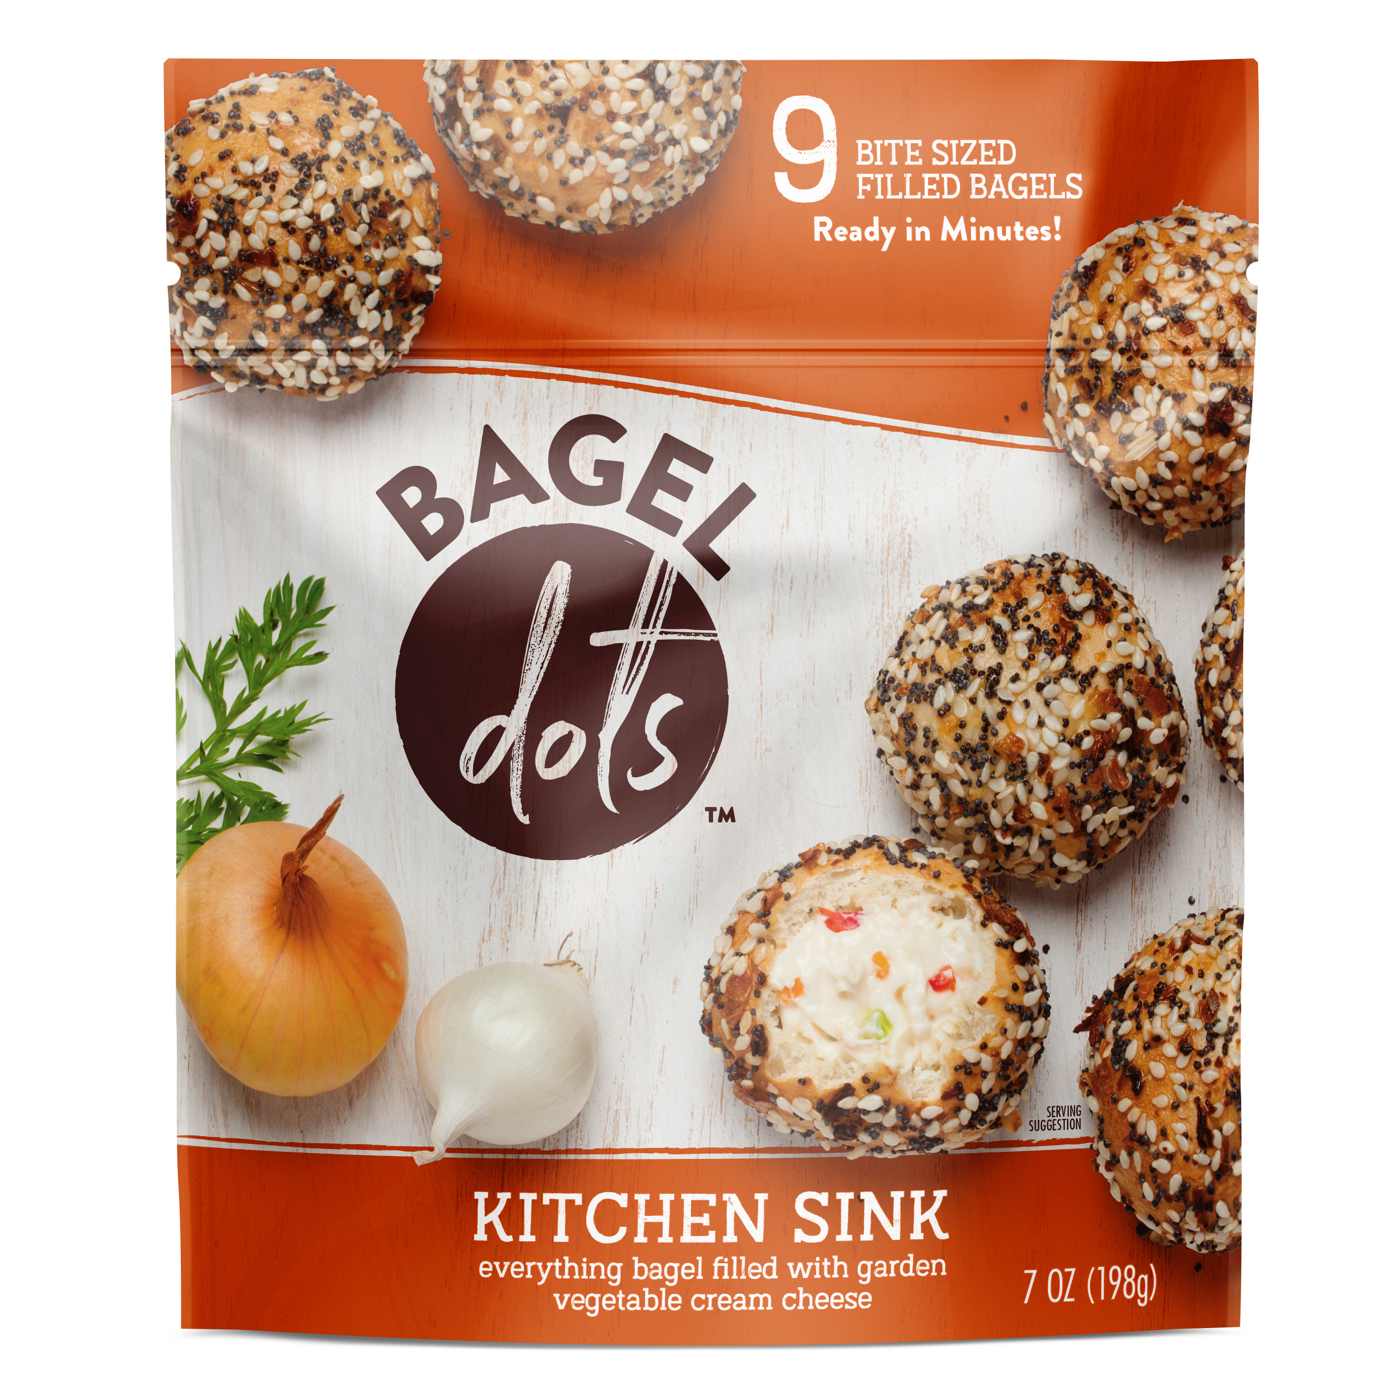 Bagel Dots Kitchen Sink; image 1 of 3